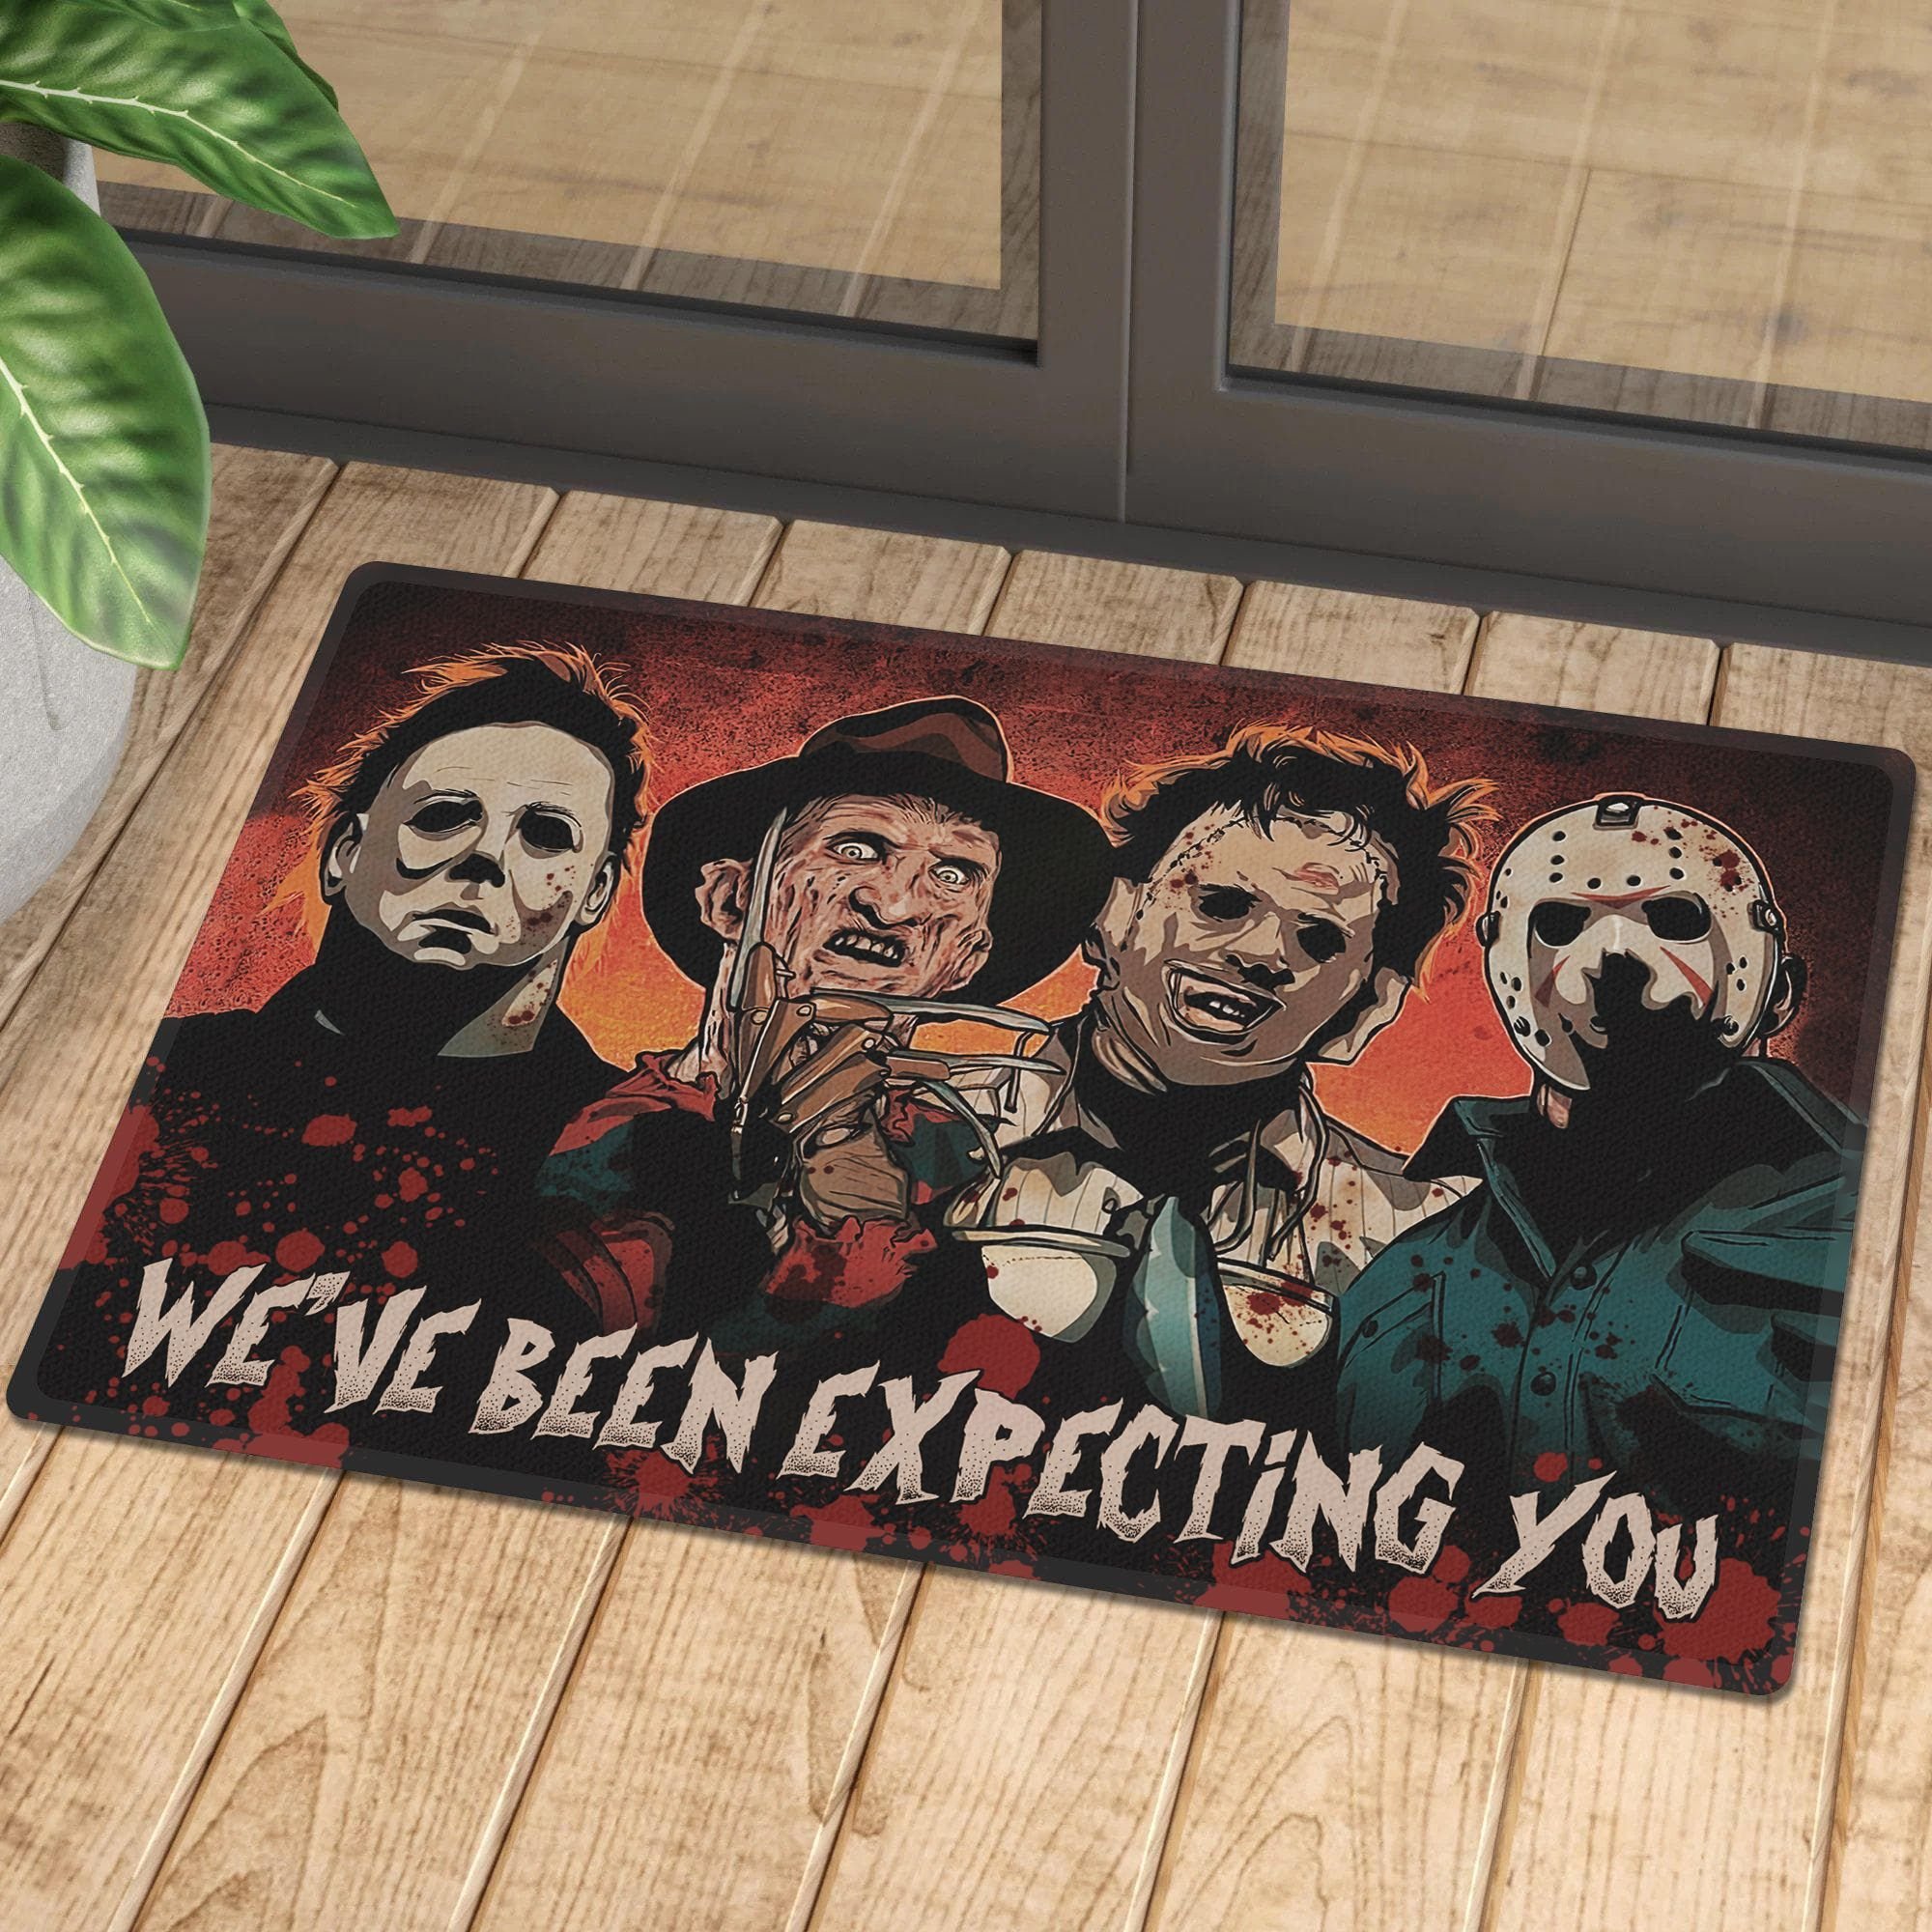 Horror characters we have been expecting you doormat 1